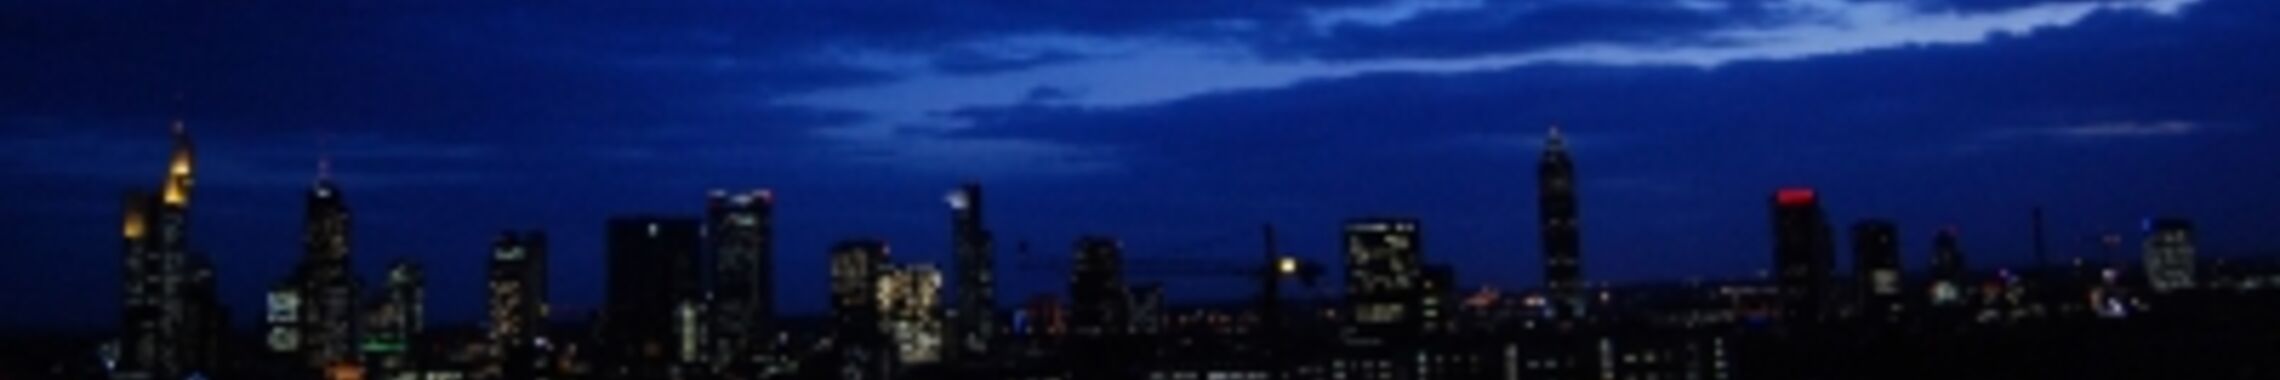 Skyline at night